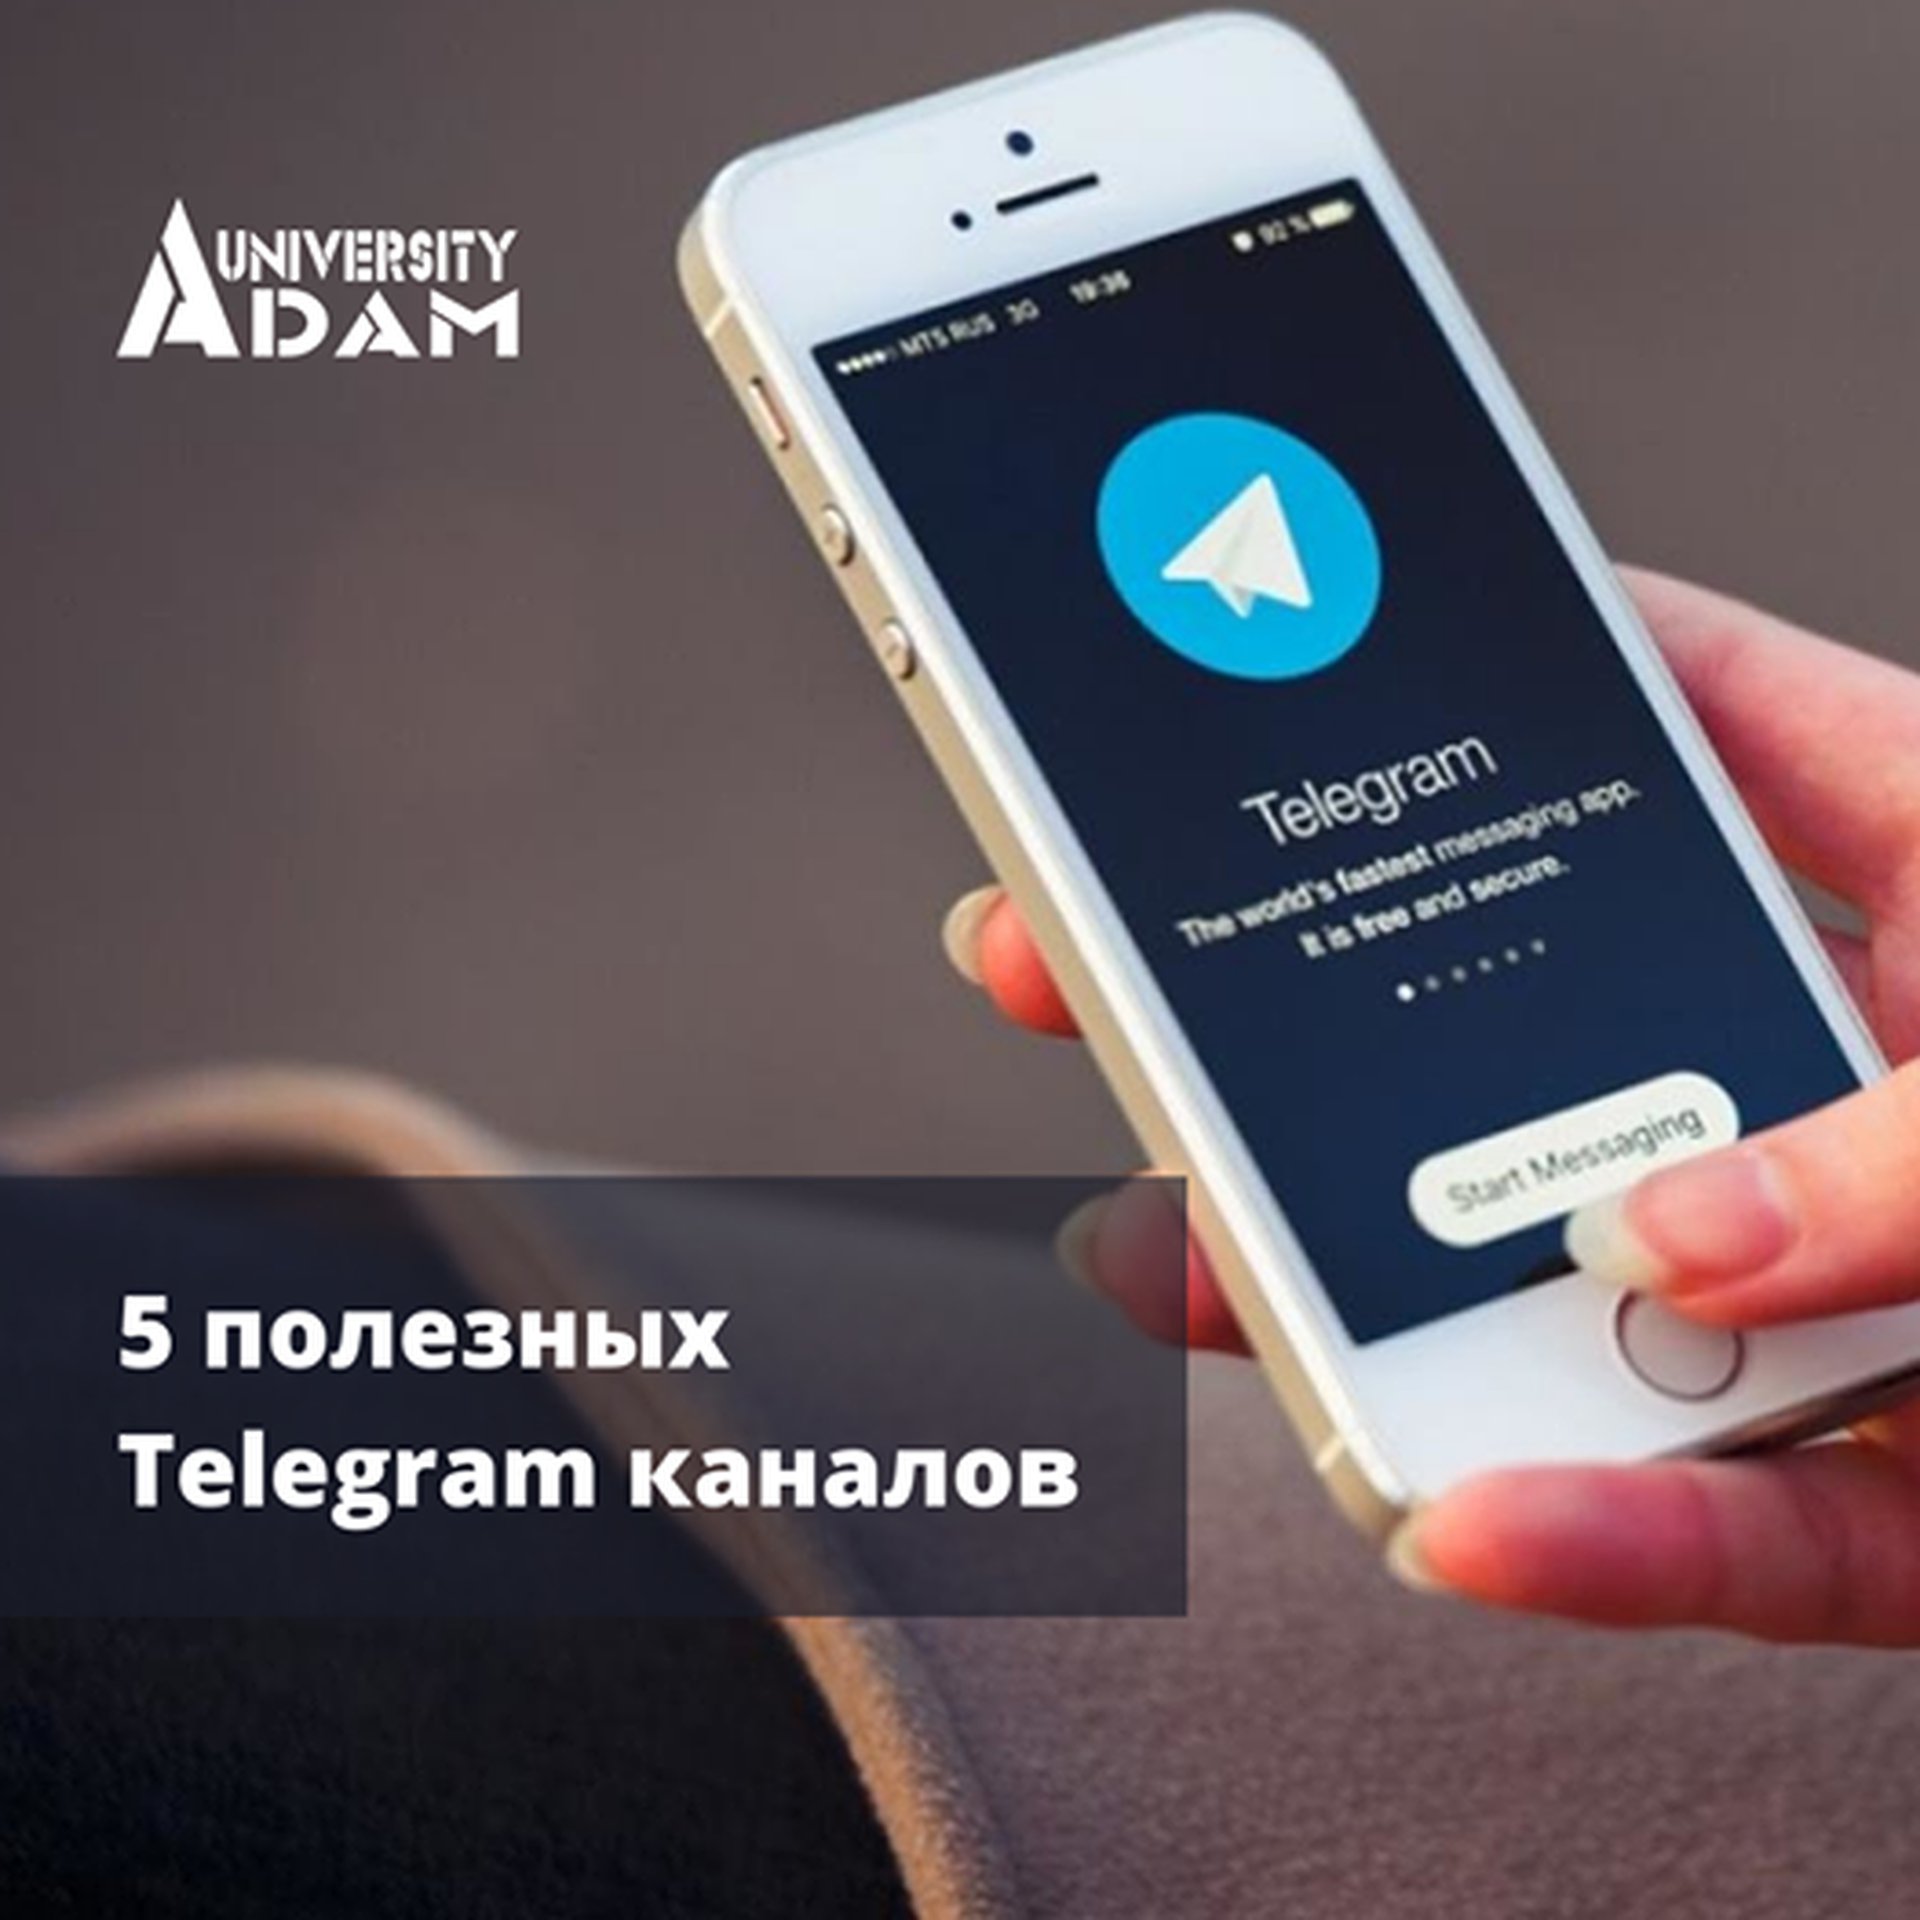 5 useful Telegram channels